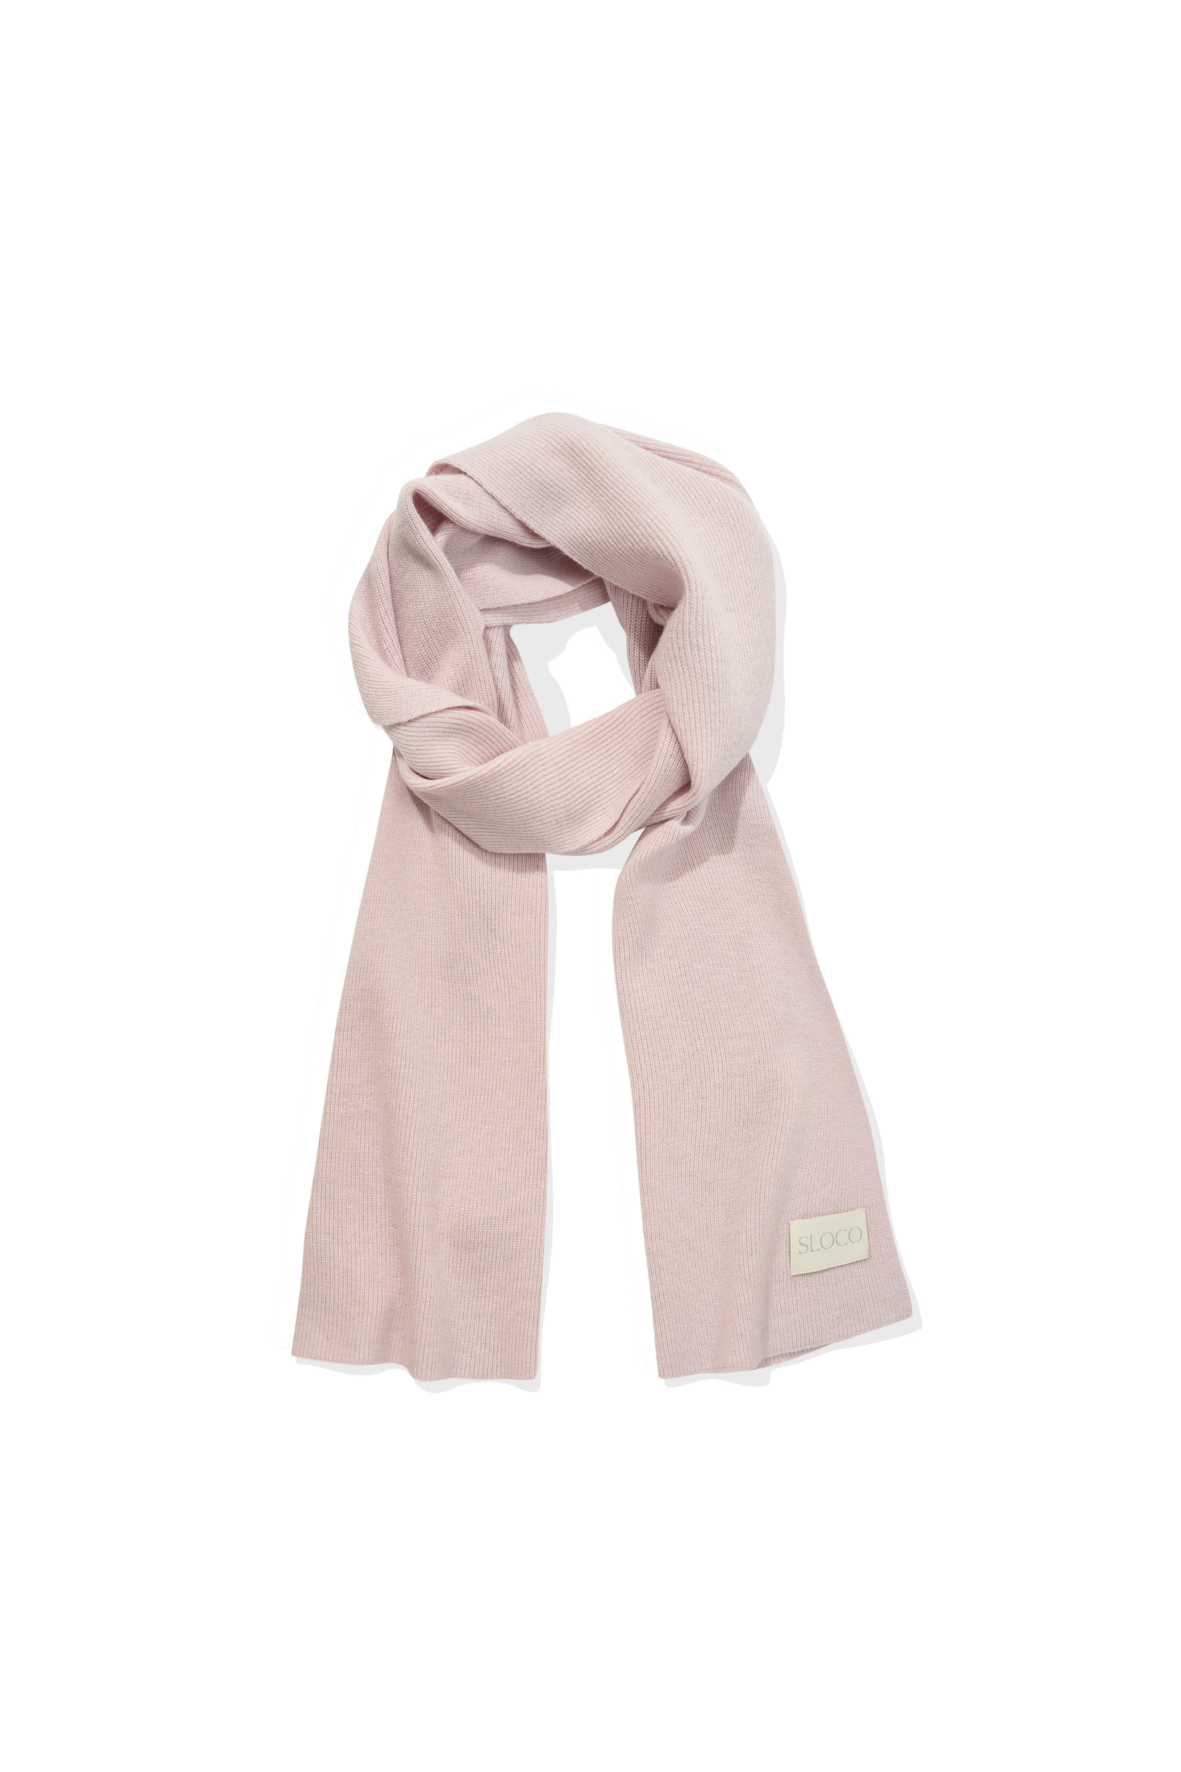 [SLOCO] Jenna cashmere knit muffler, pale pink